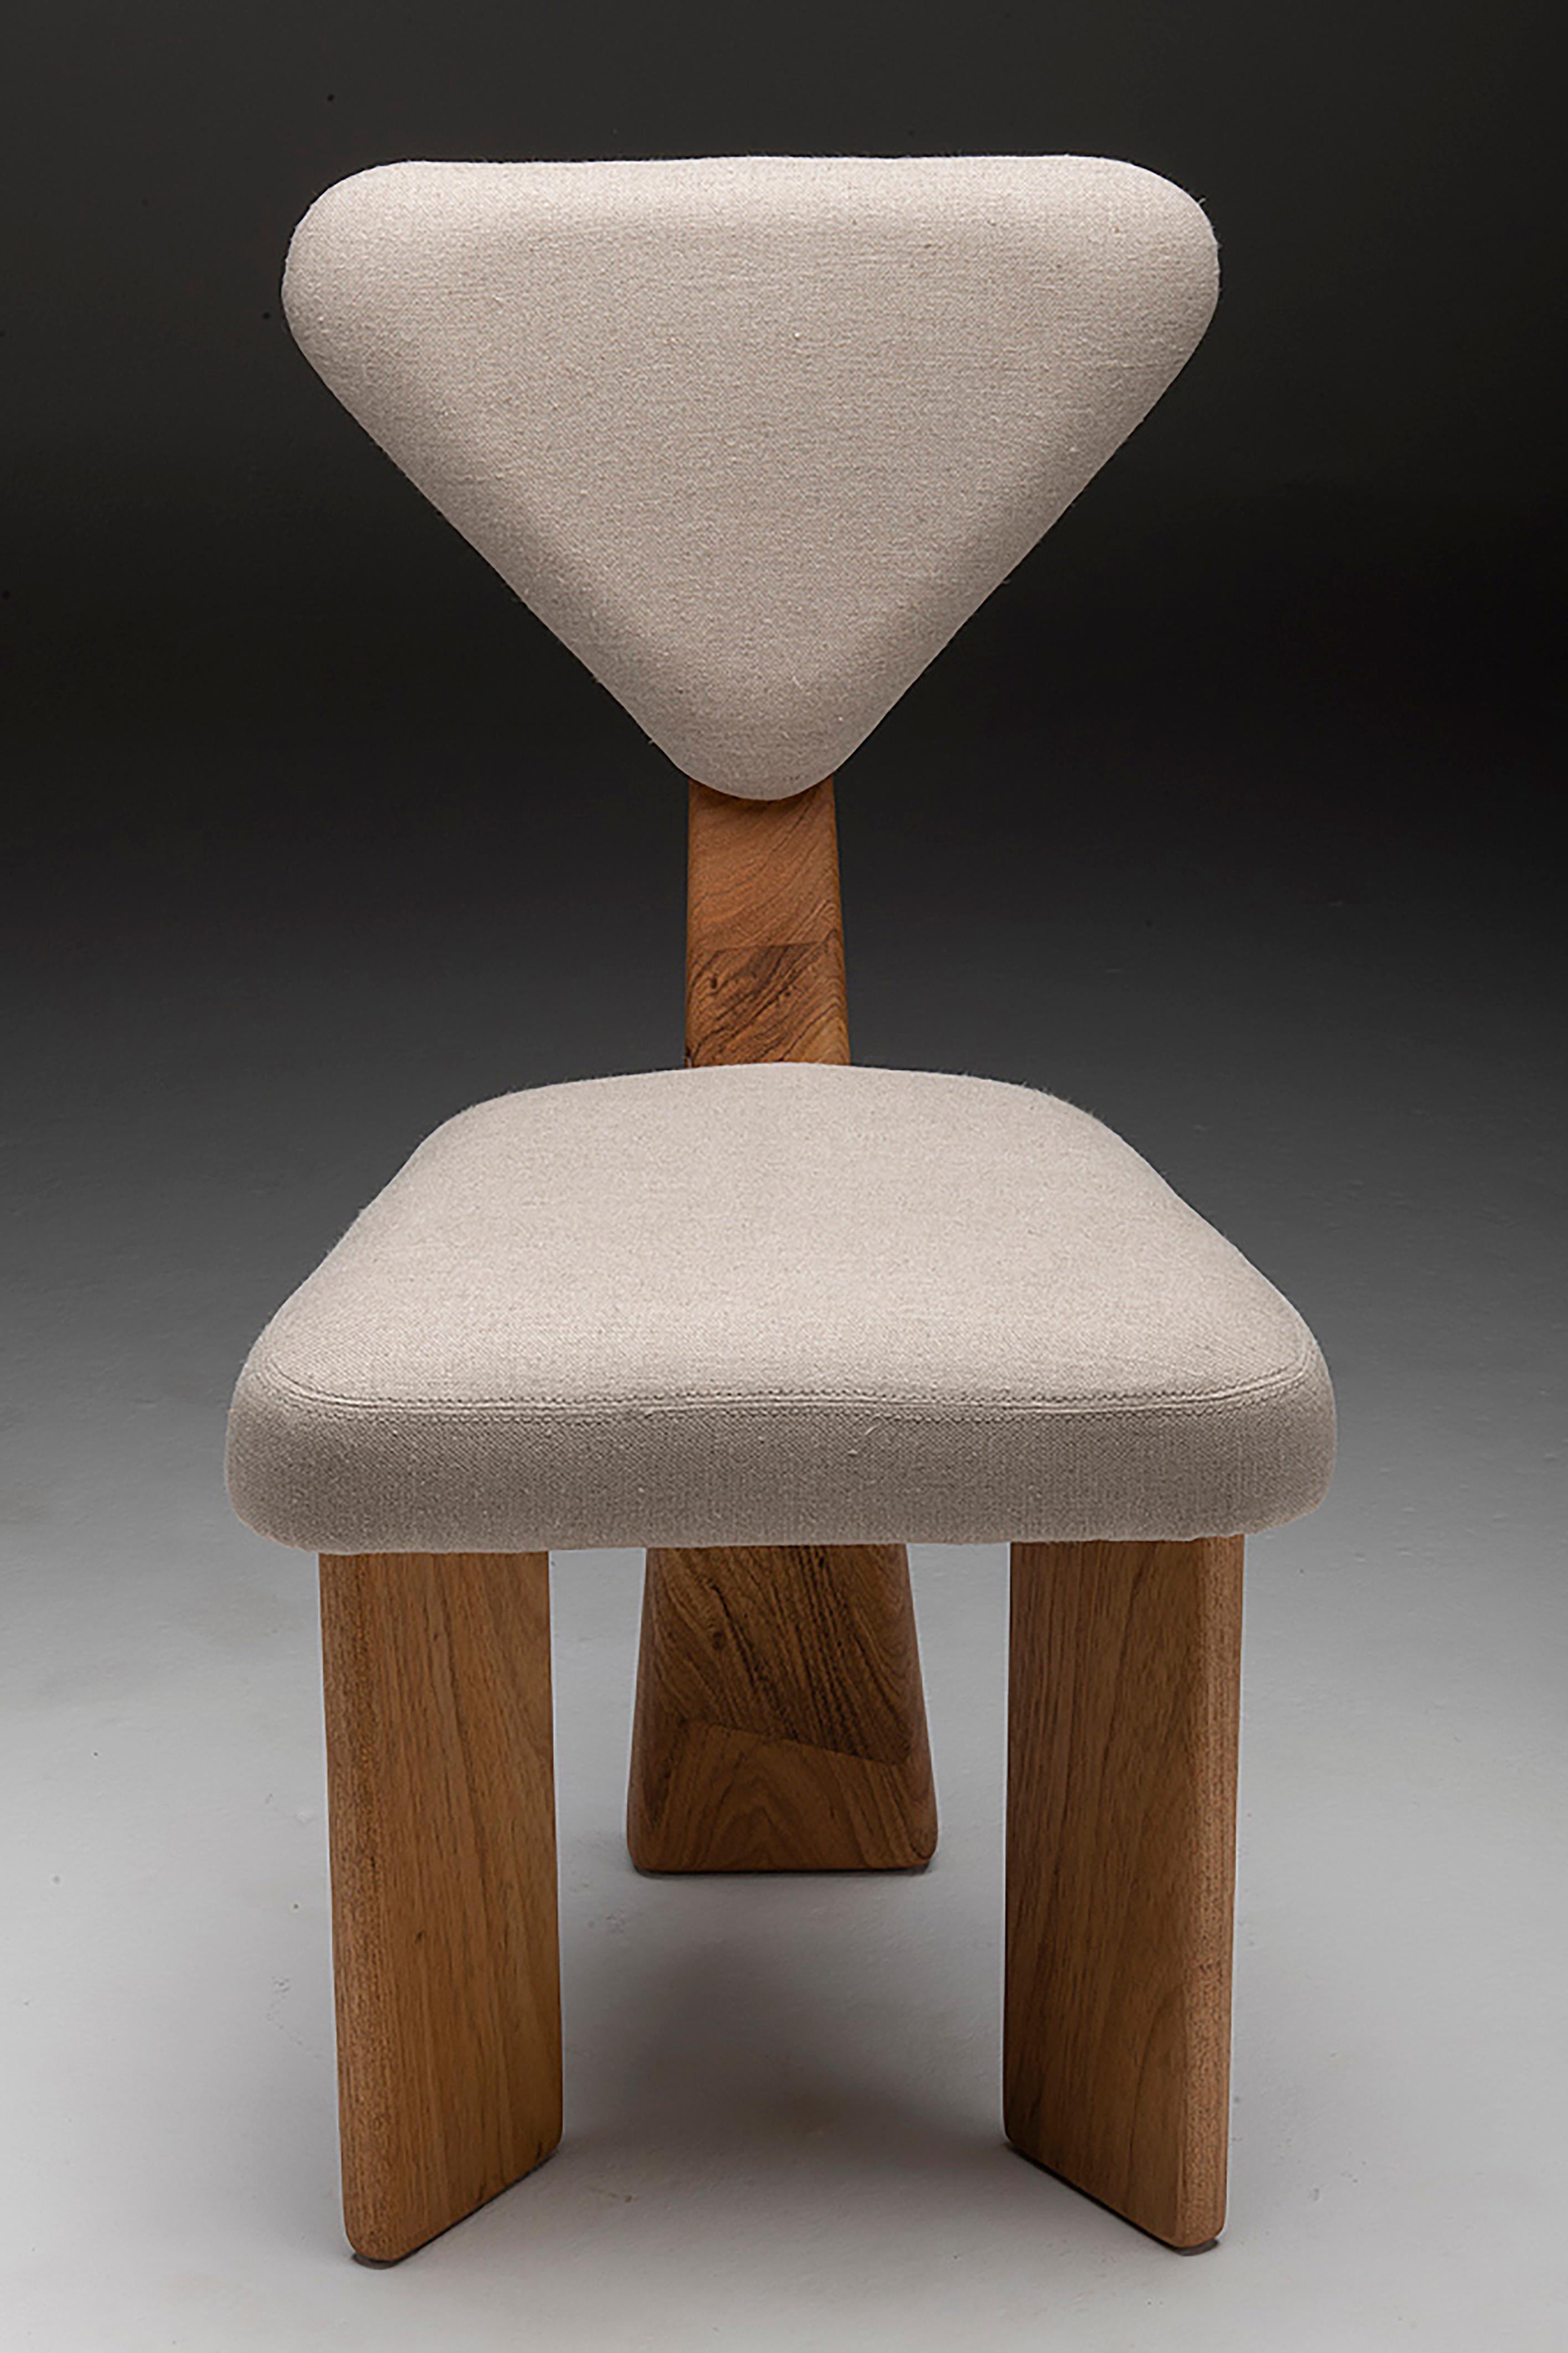 A set of Giraffe Chair in Solid Brazilian Walnut Wood by Juliana Vasconcellos 12